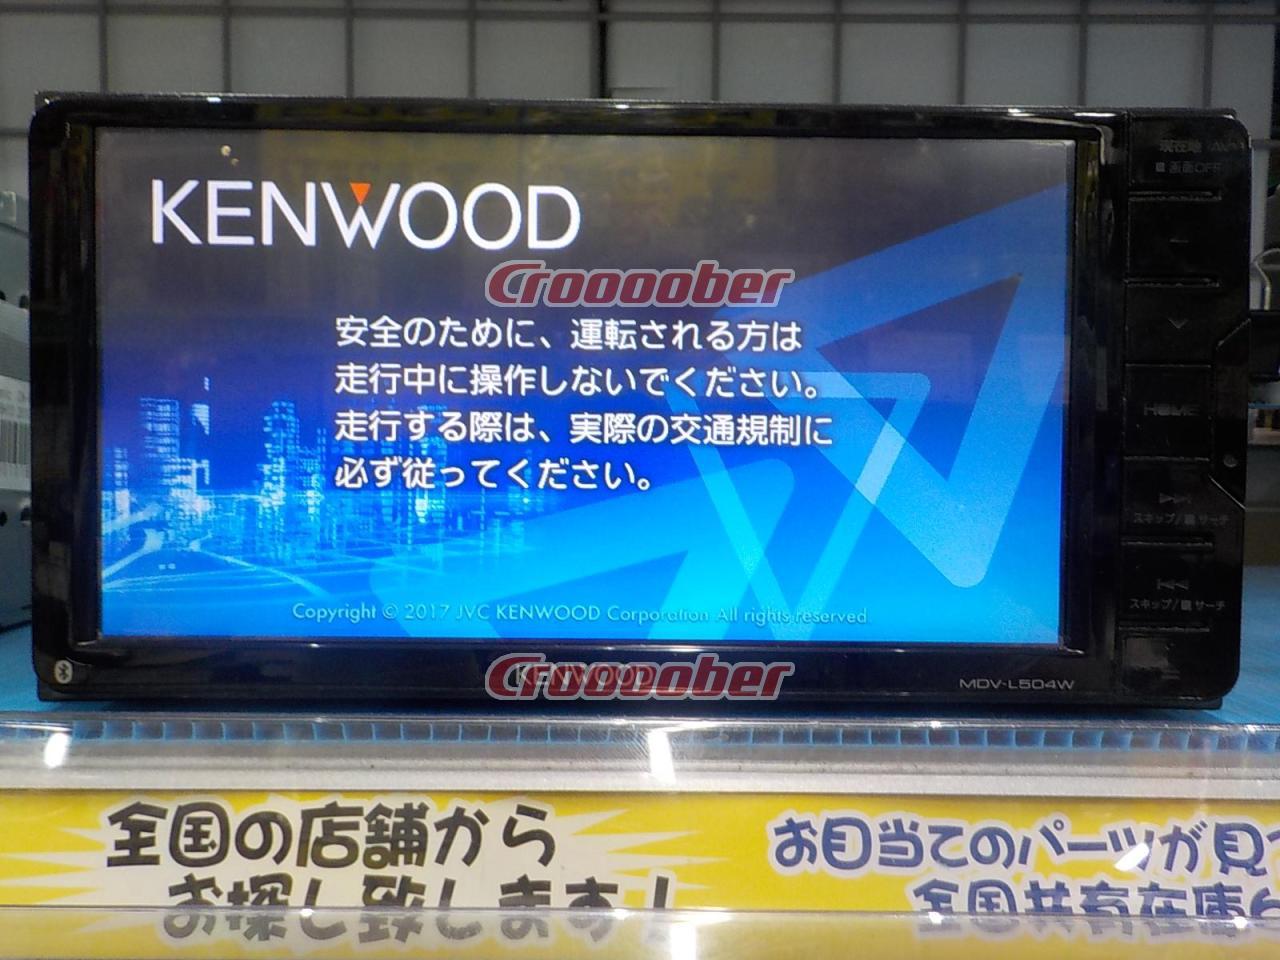 KENWOOD MDV-L504W ☆Bluetooth(ハンズフリー・オーディオ)対応